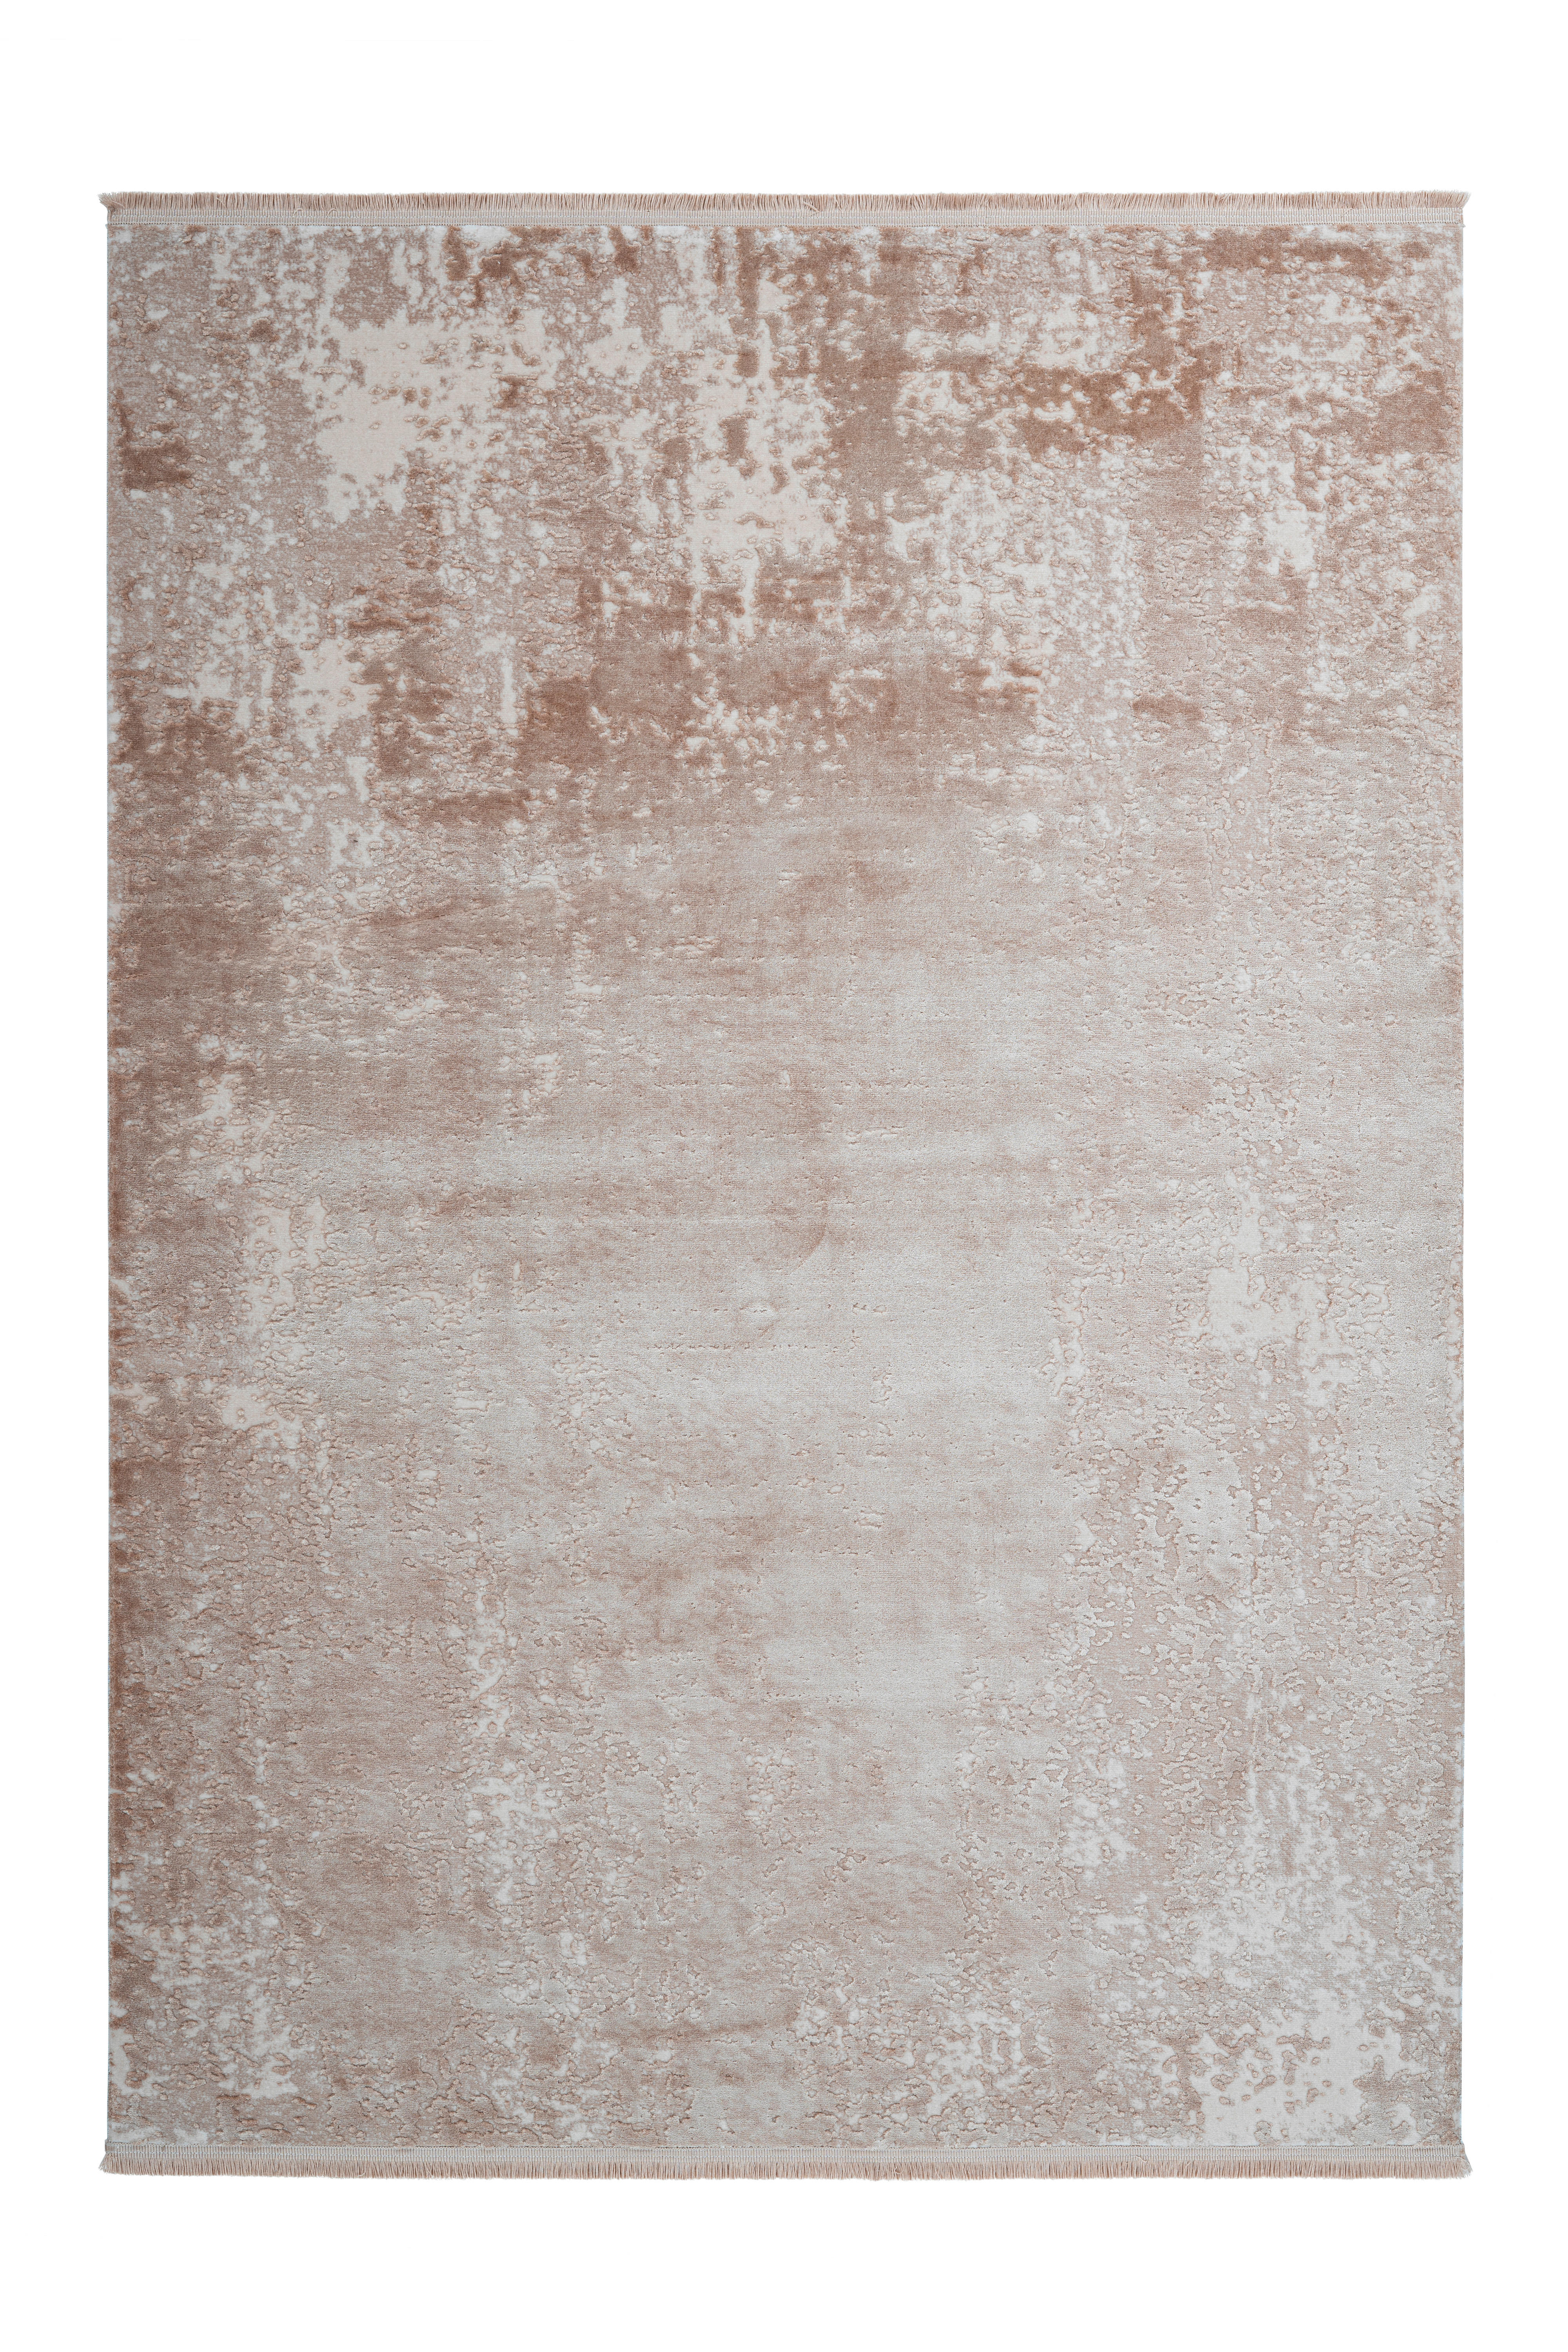 TKANI TEPIH  bež     - bež, Design, tekstil (80/150cm) - Pierre Cardin